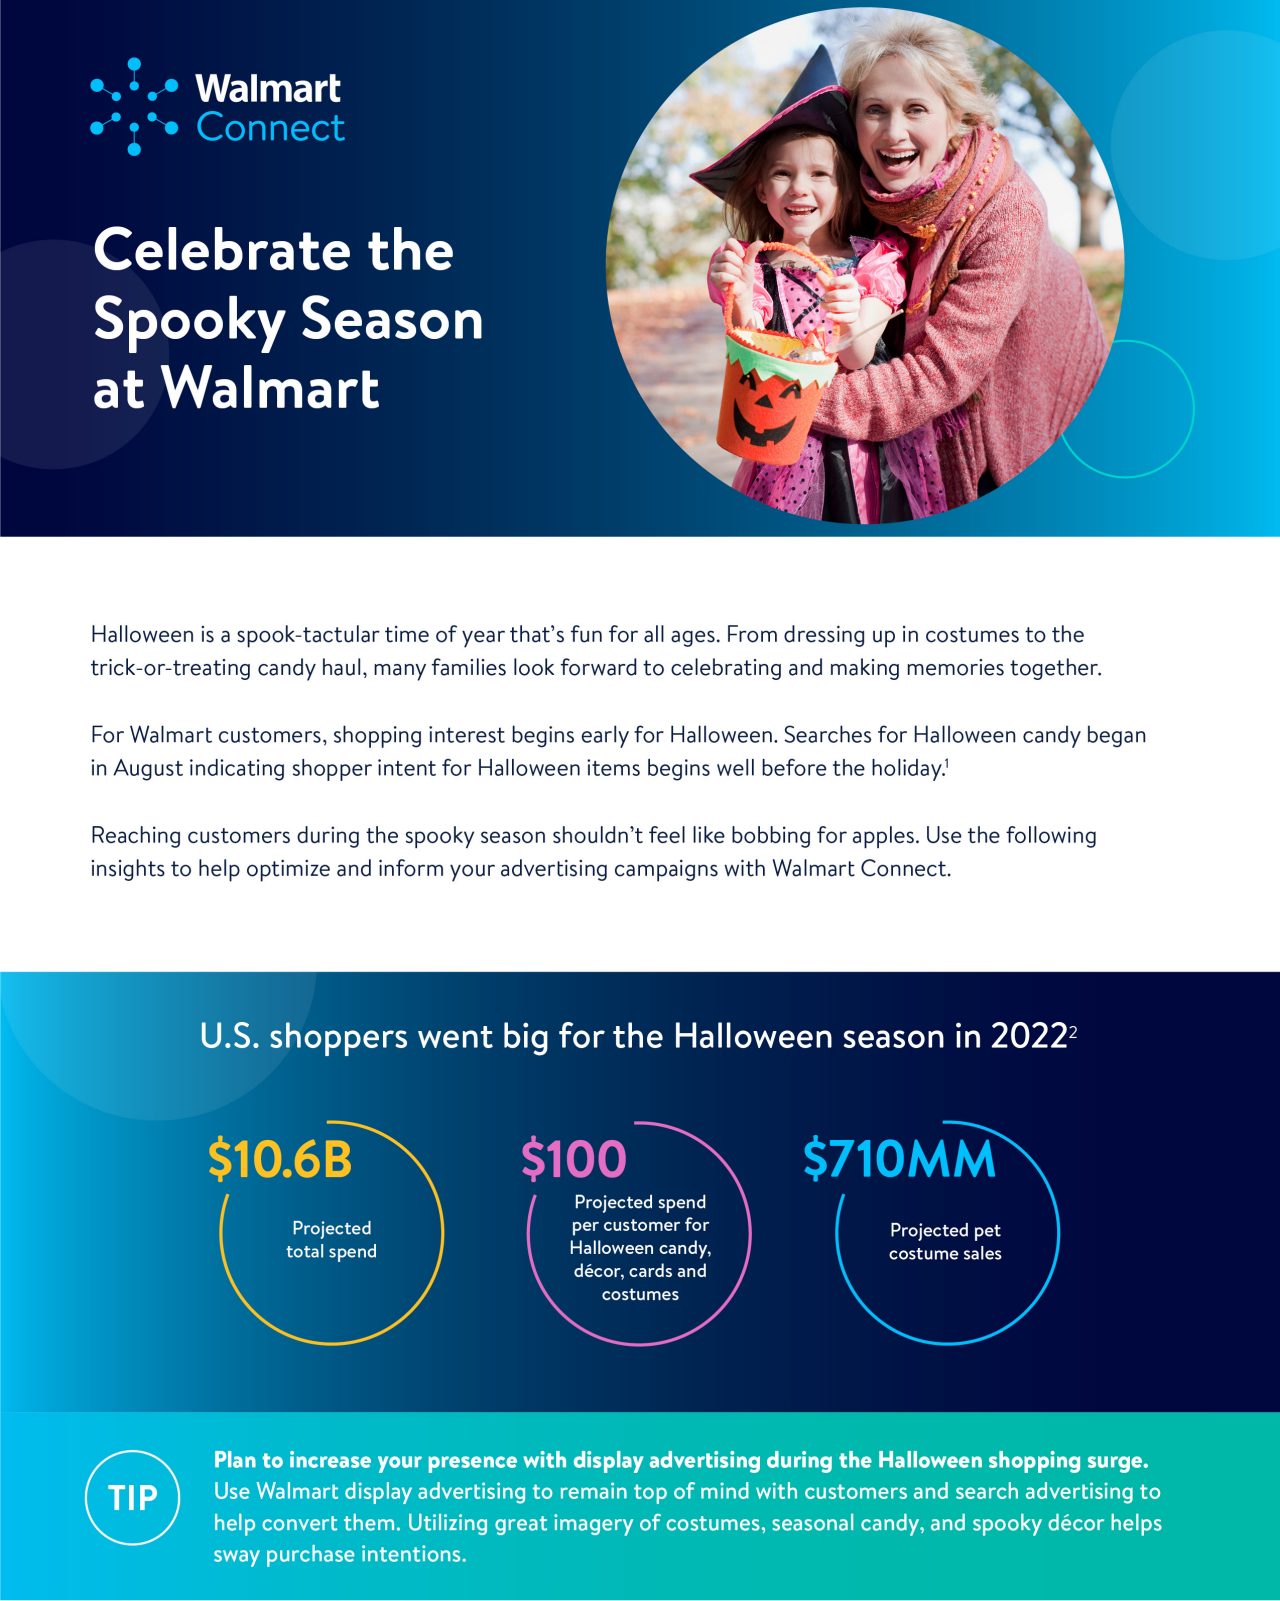 The 100 best Walmart holiday deals